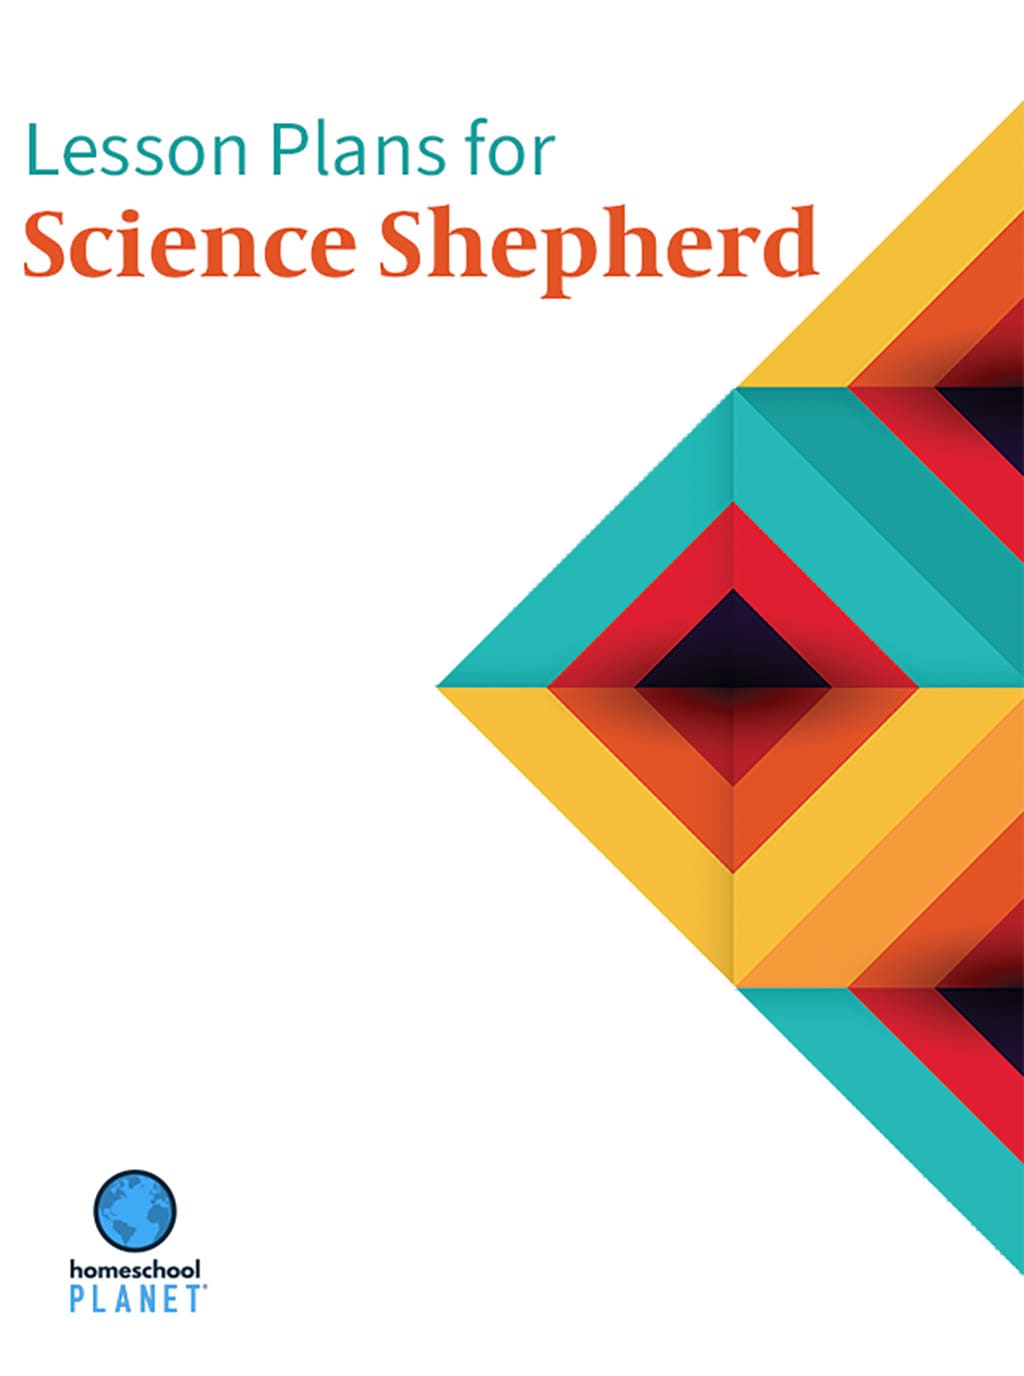 Science Shepherd homeschool Biology lesson plan cover with Homeschool Planet logo